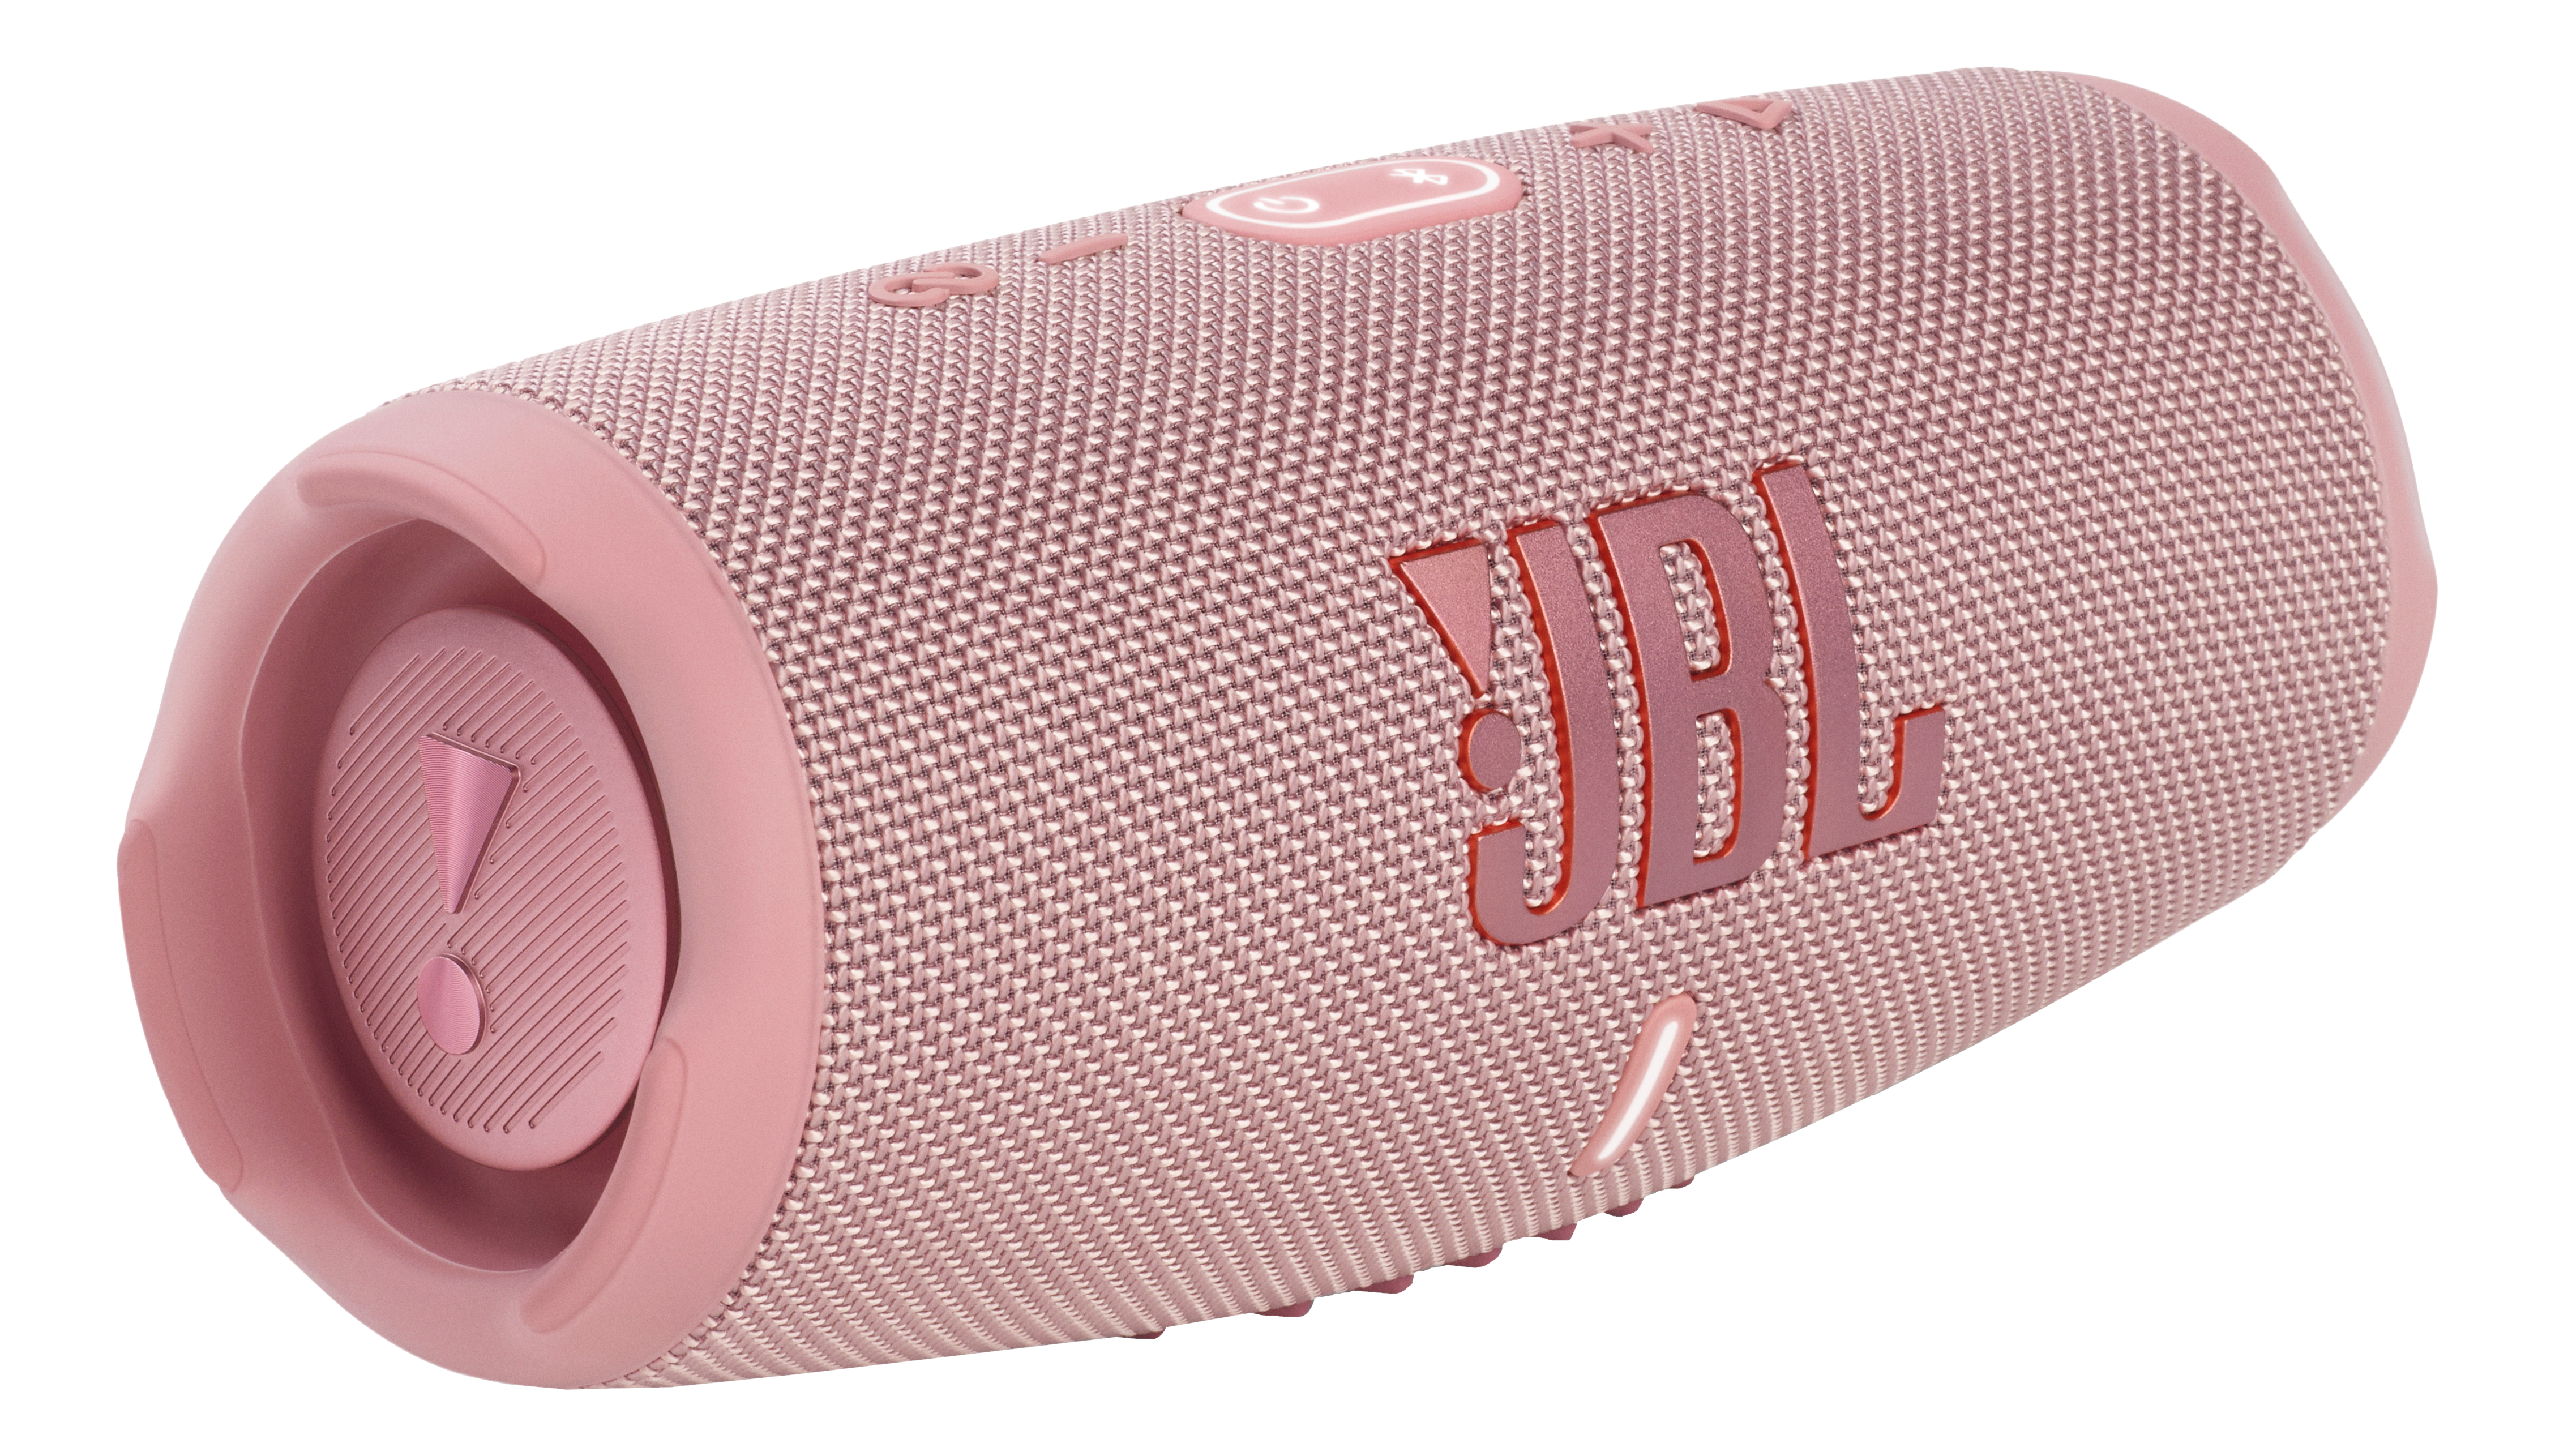 JBL Charge 5 - Bluetooth Lautsprecher (Pink)